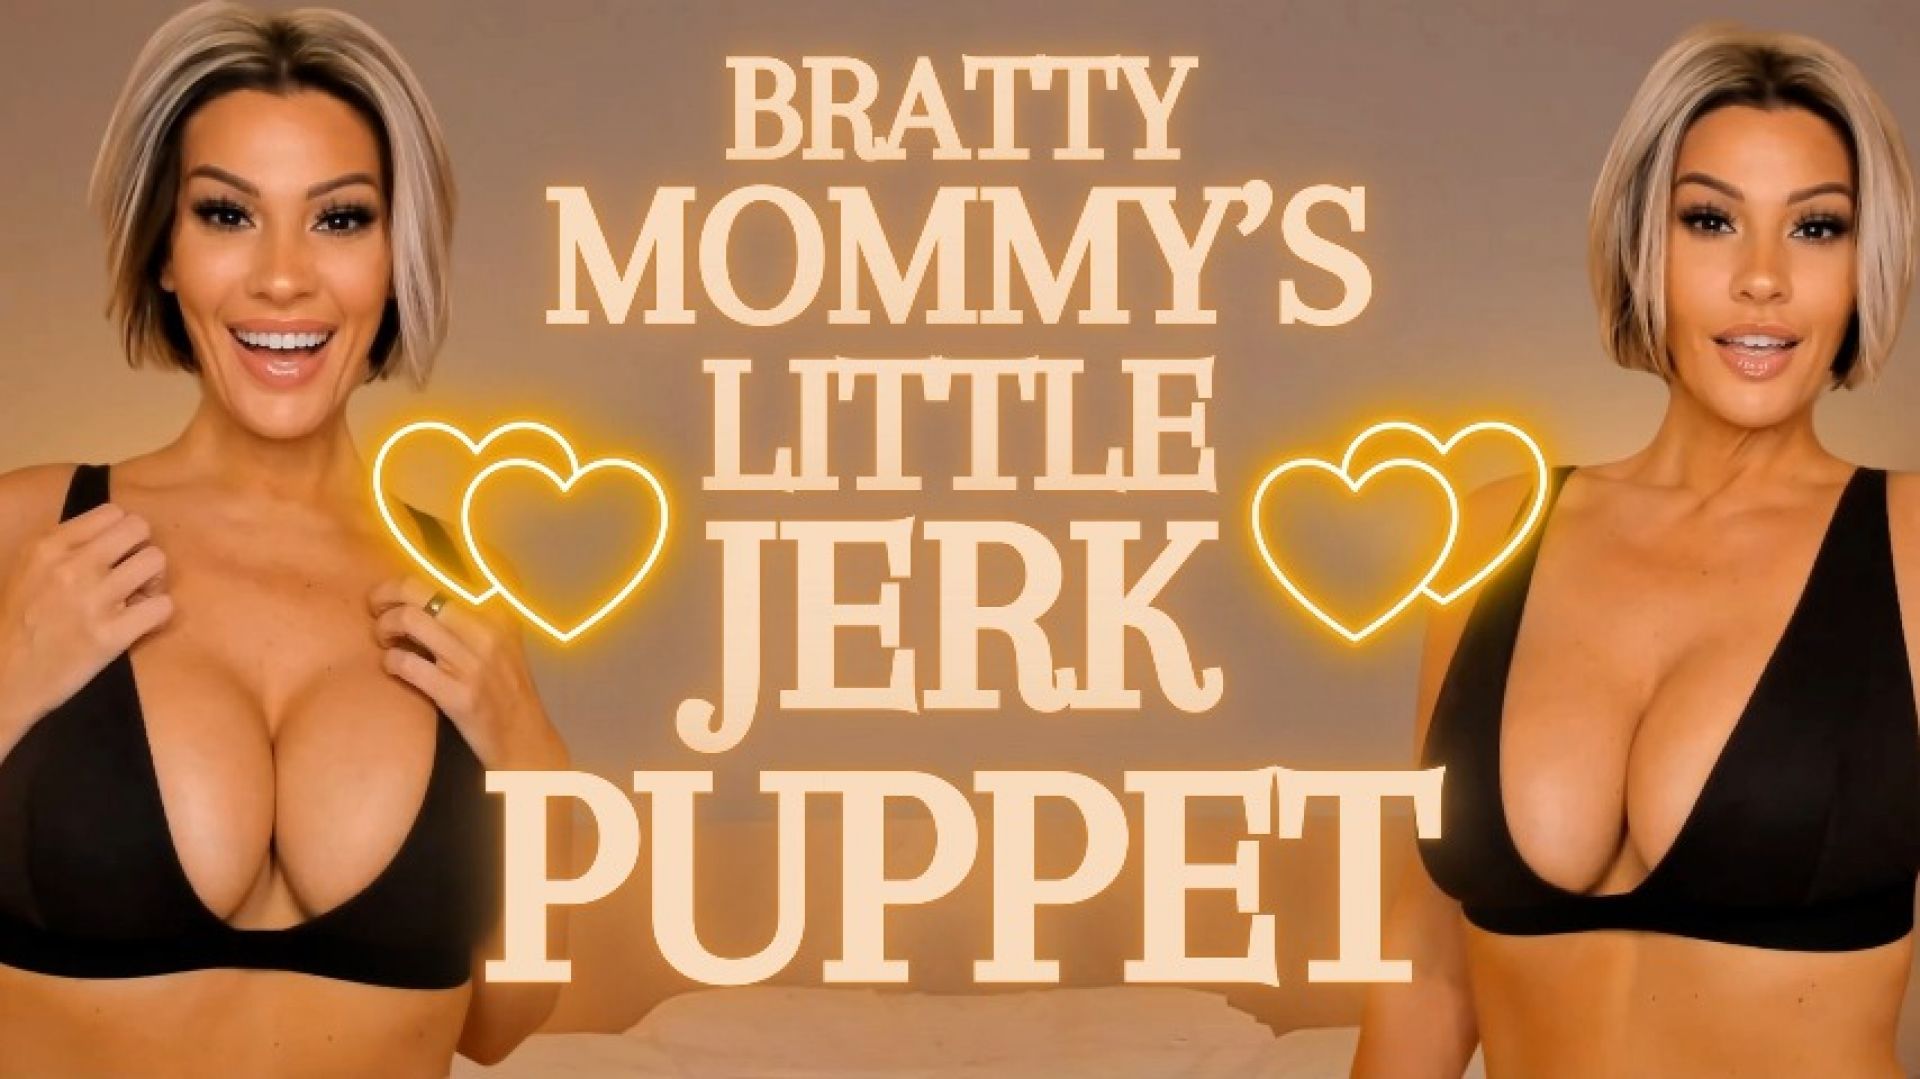 Bratty Mommy's Little Jerk Puppet